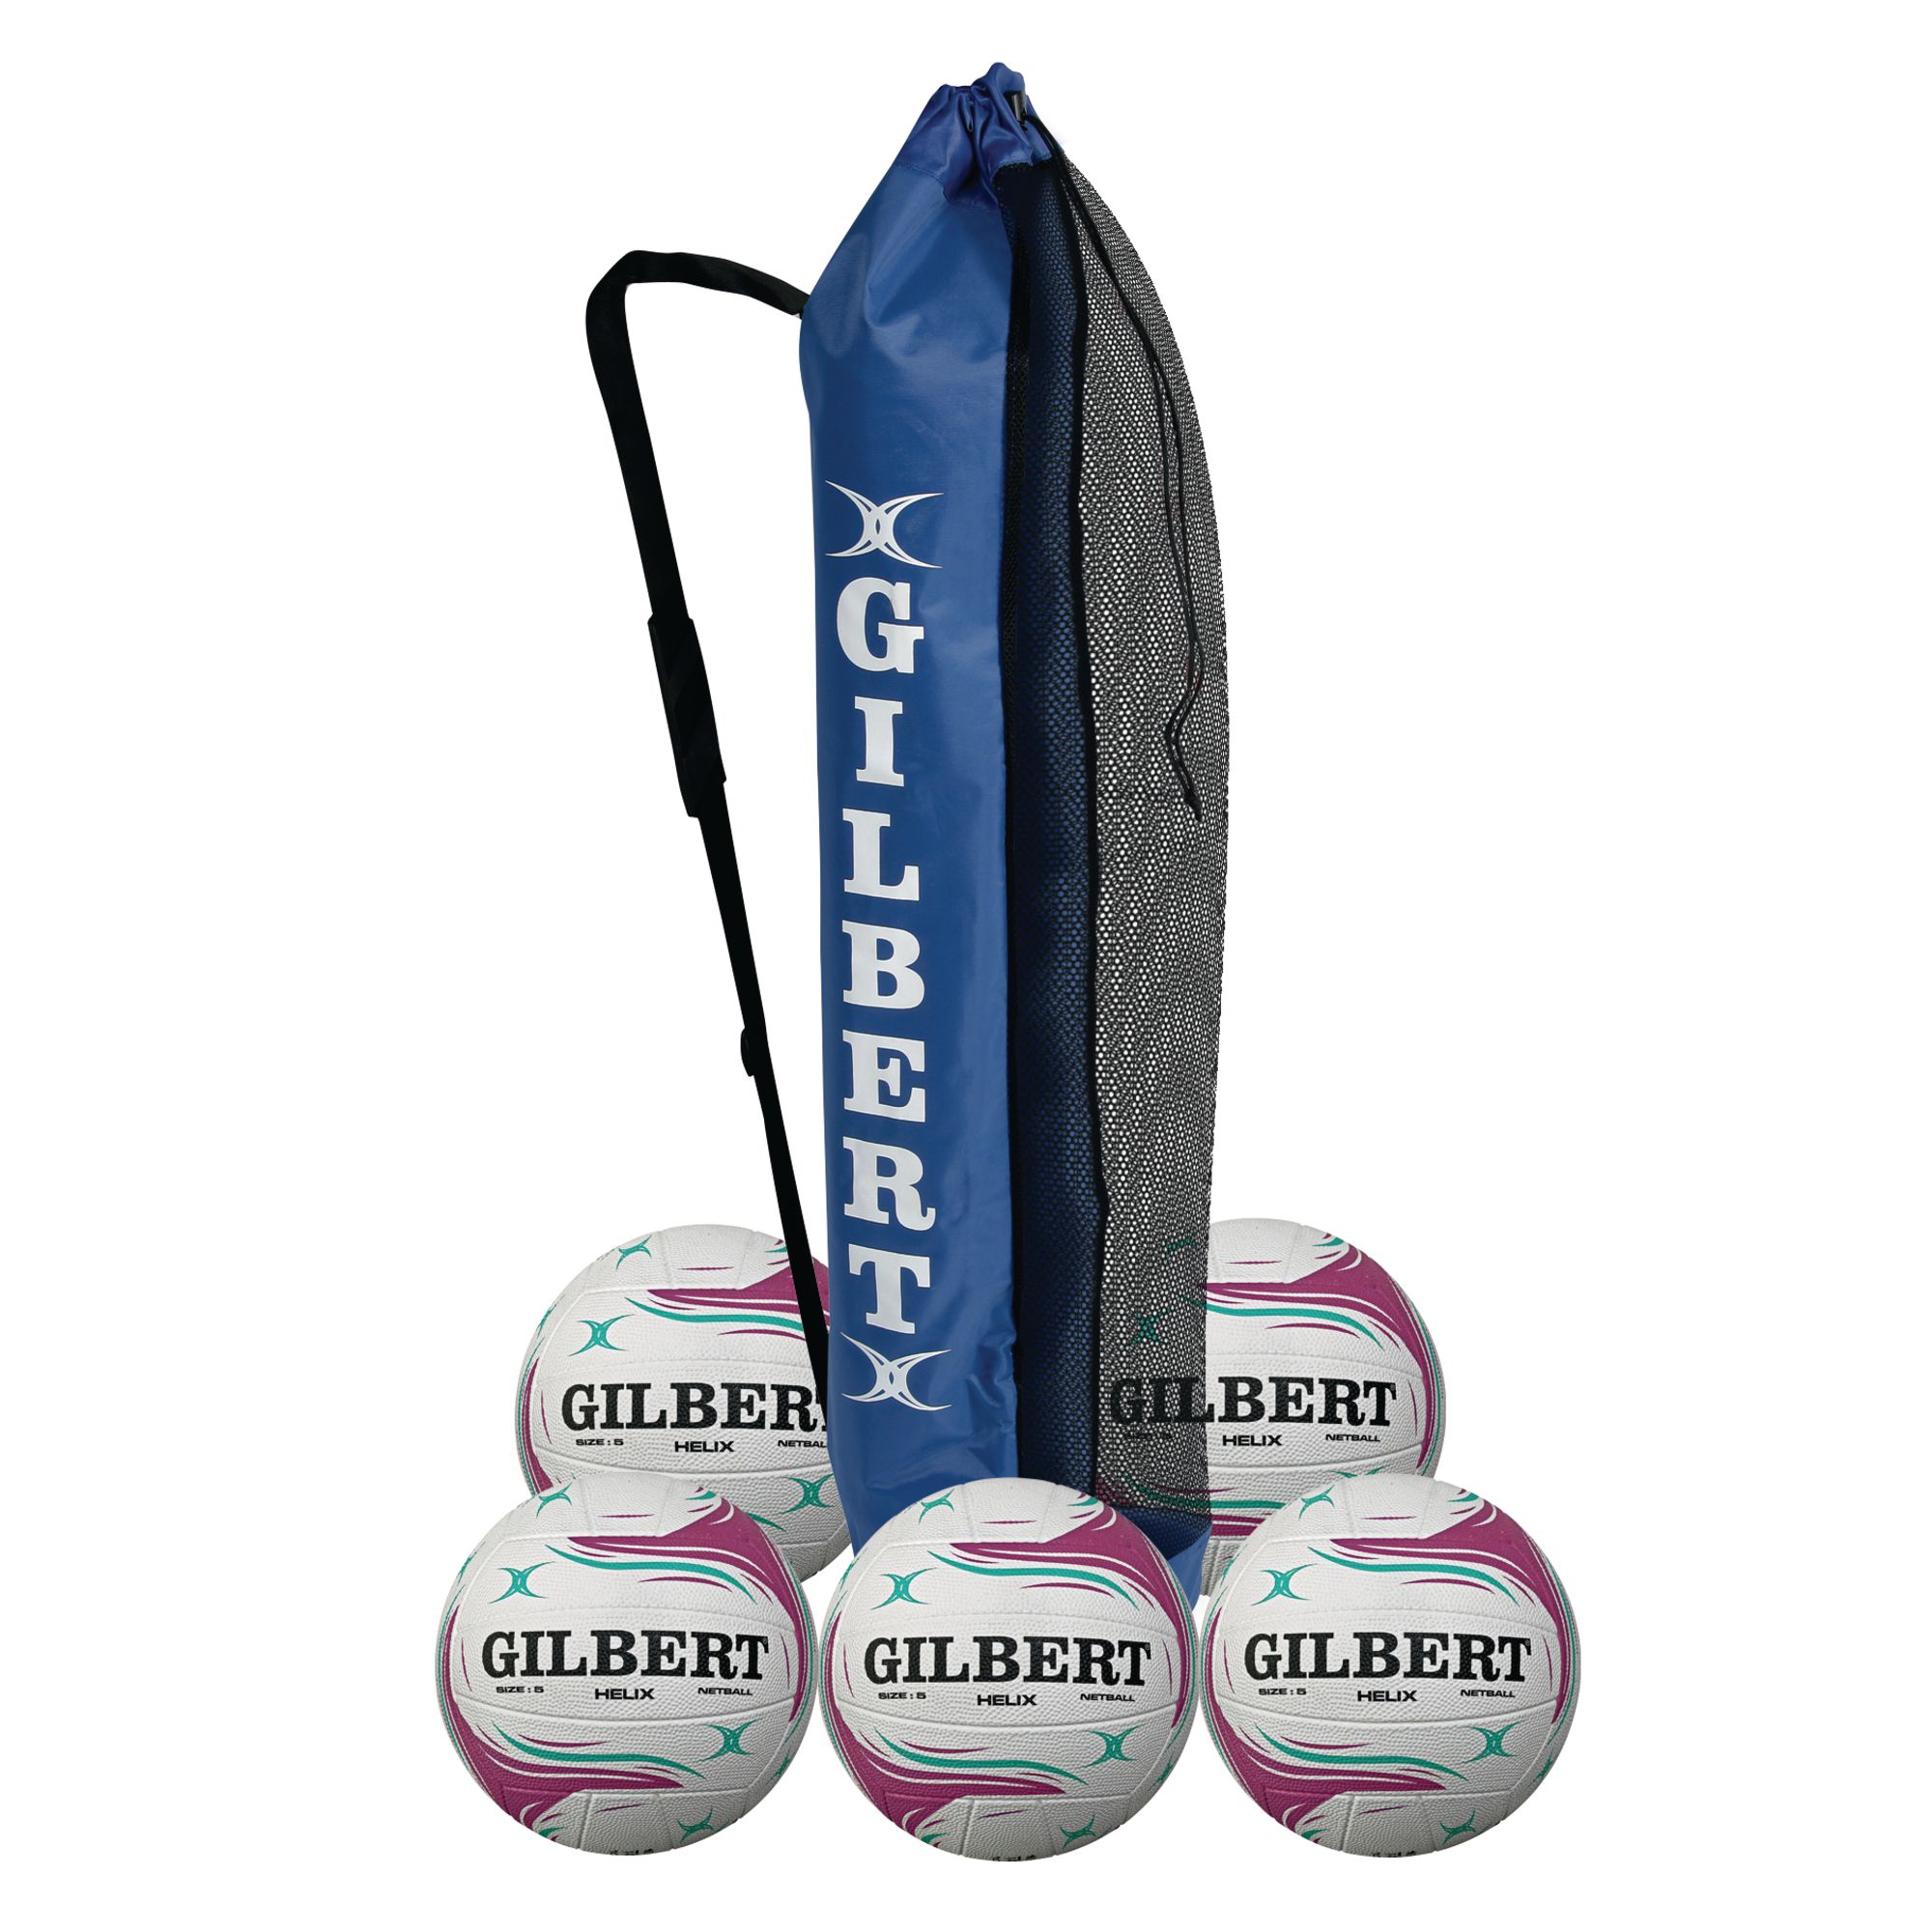 Gil Helix Match Netball Purple S5 P5 Bag